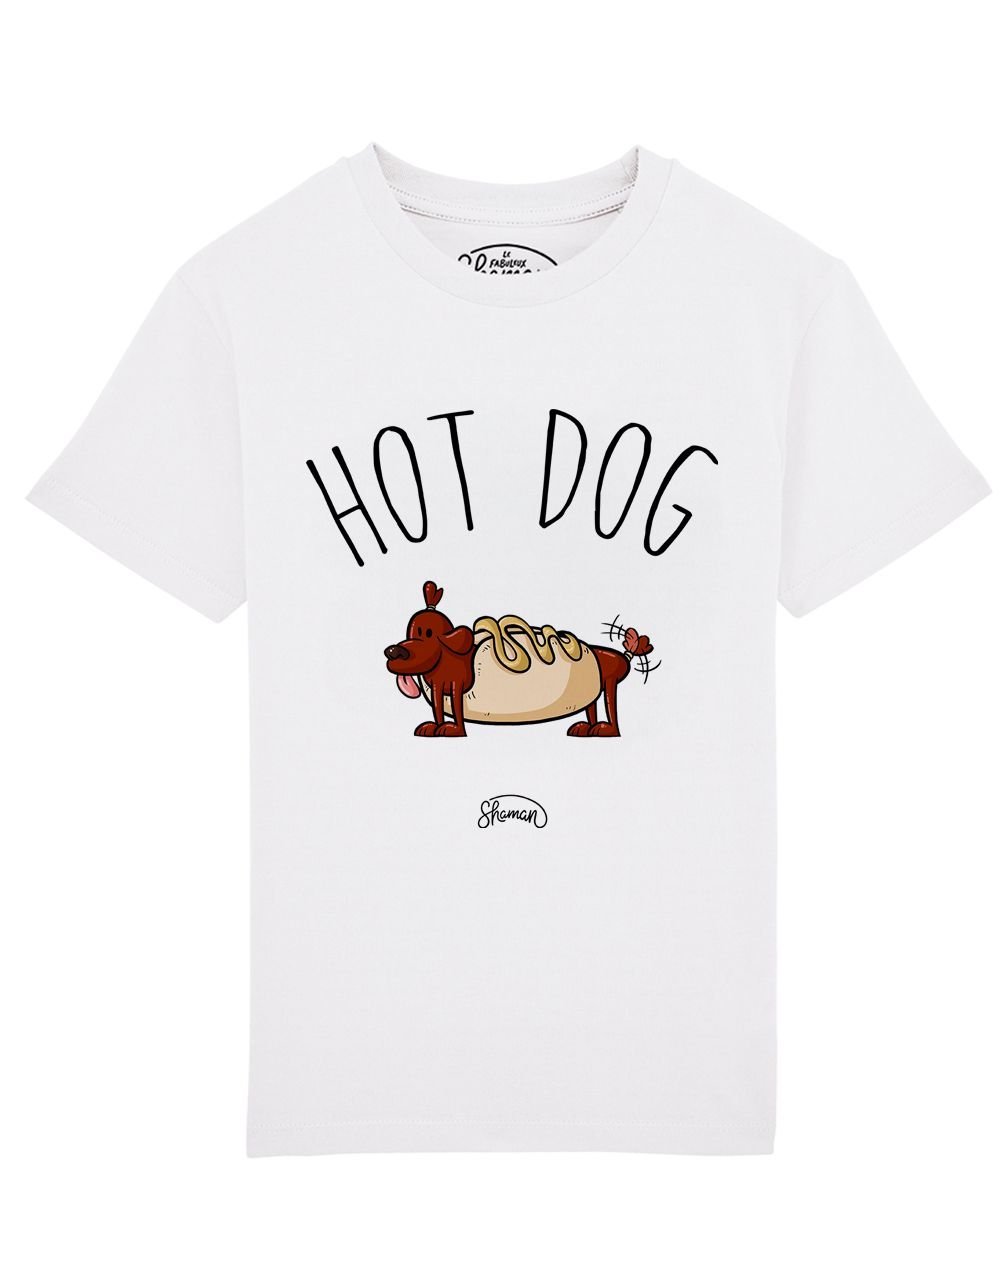 Tee shirt Hot dog